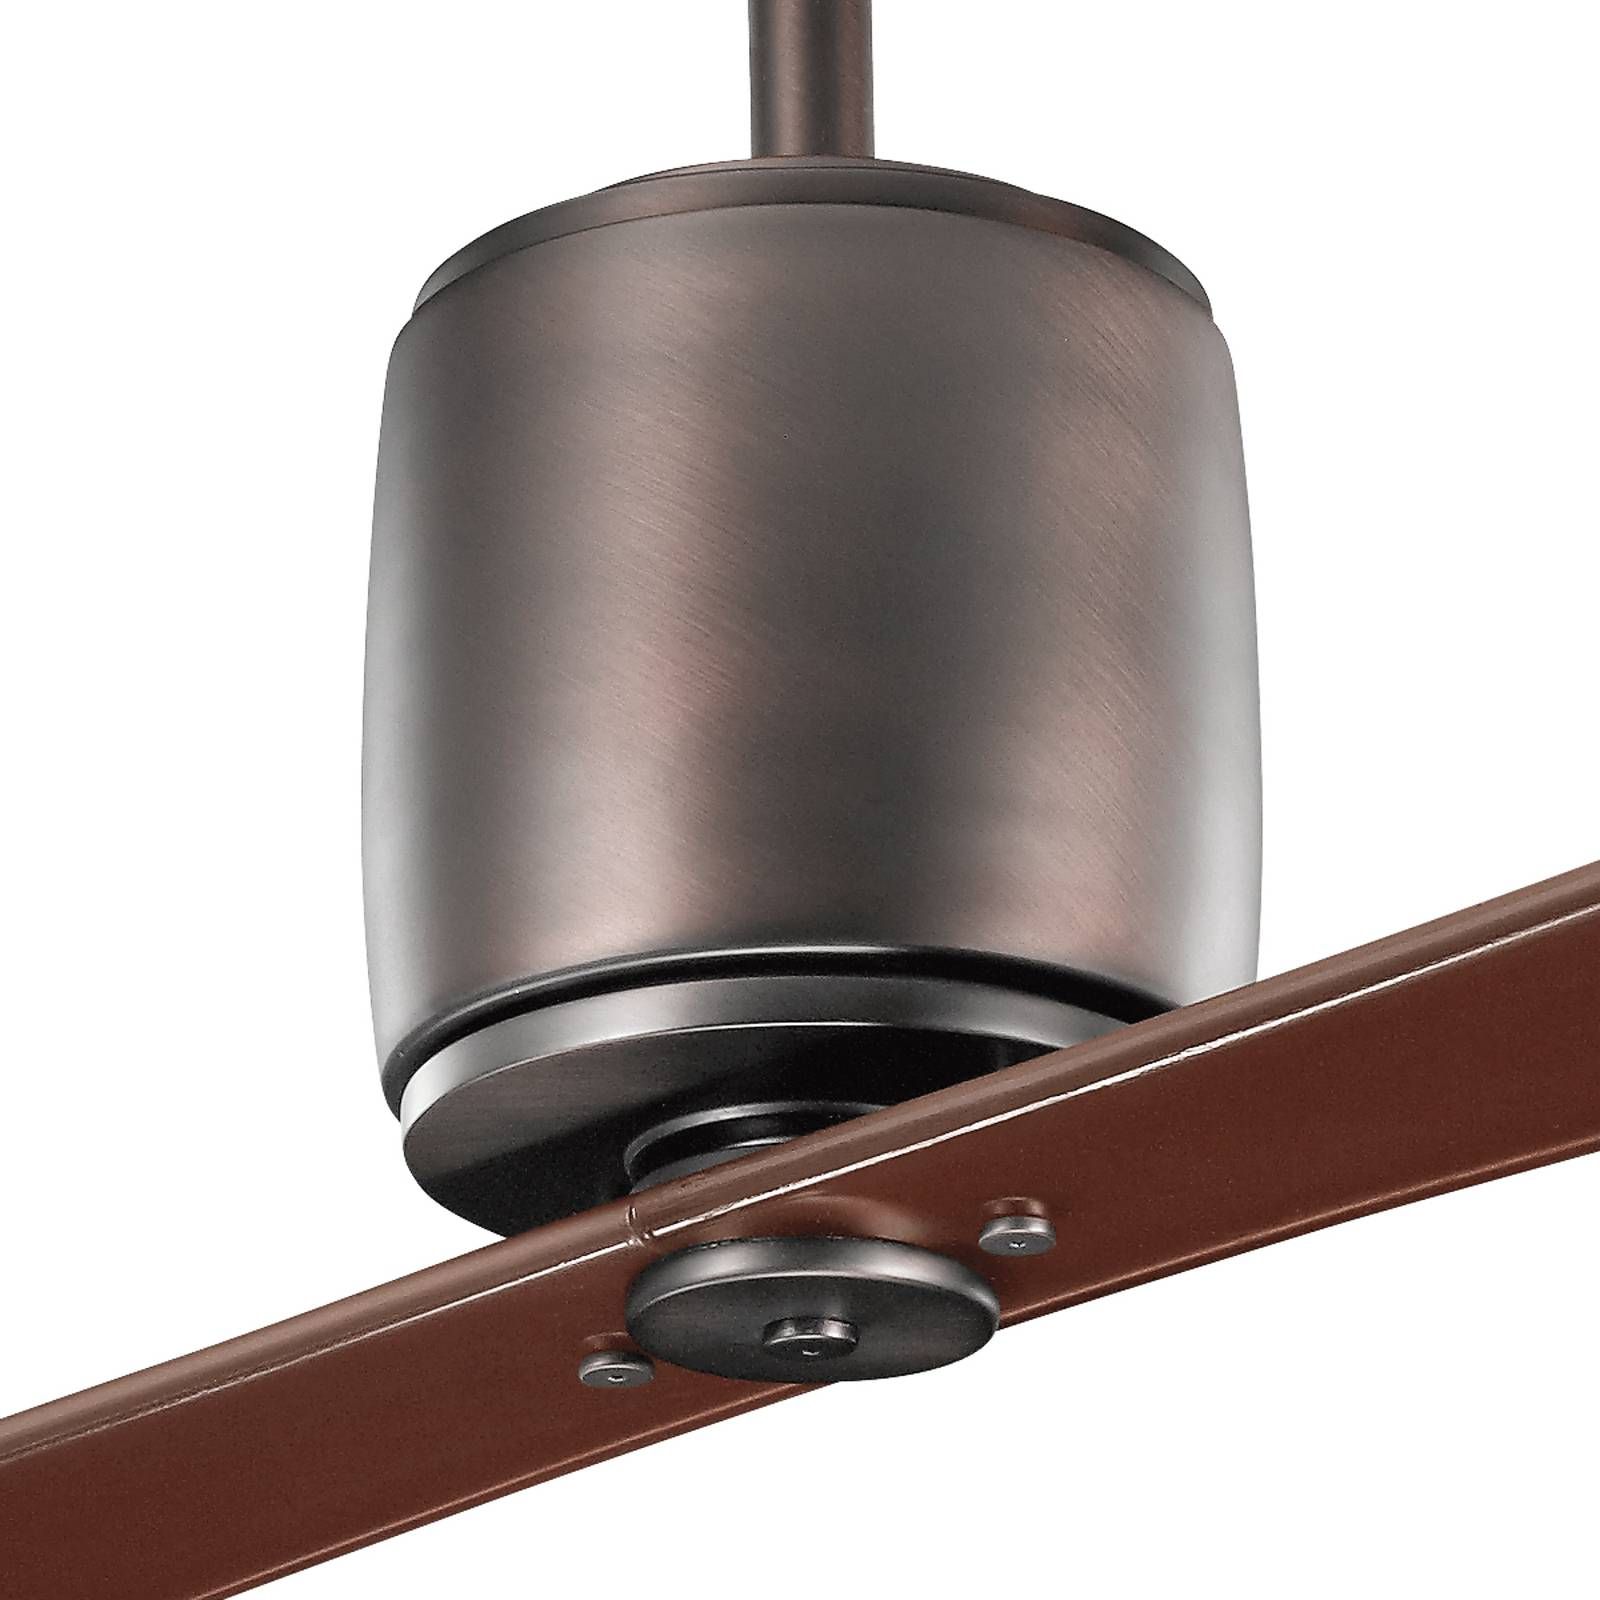 KICHLER Stropný ventilátor Ferron, lopatky olejovaný bronz, Obývacia izba / jedáleň, polykarbonát, oceľ, K: 41cm